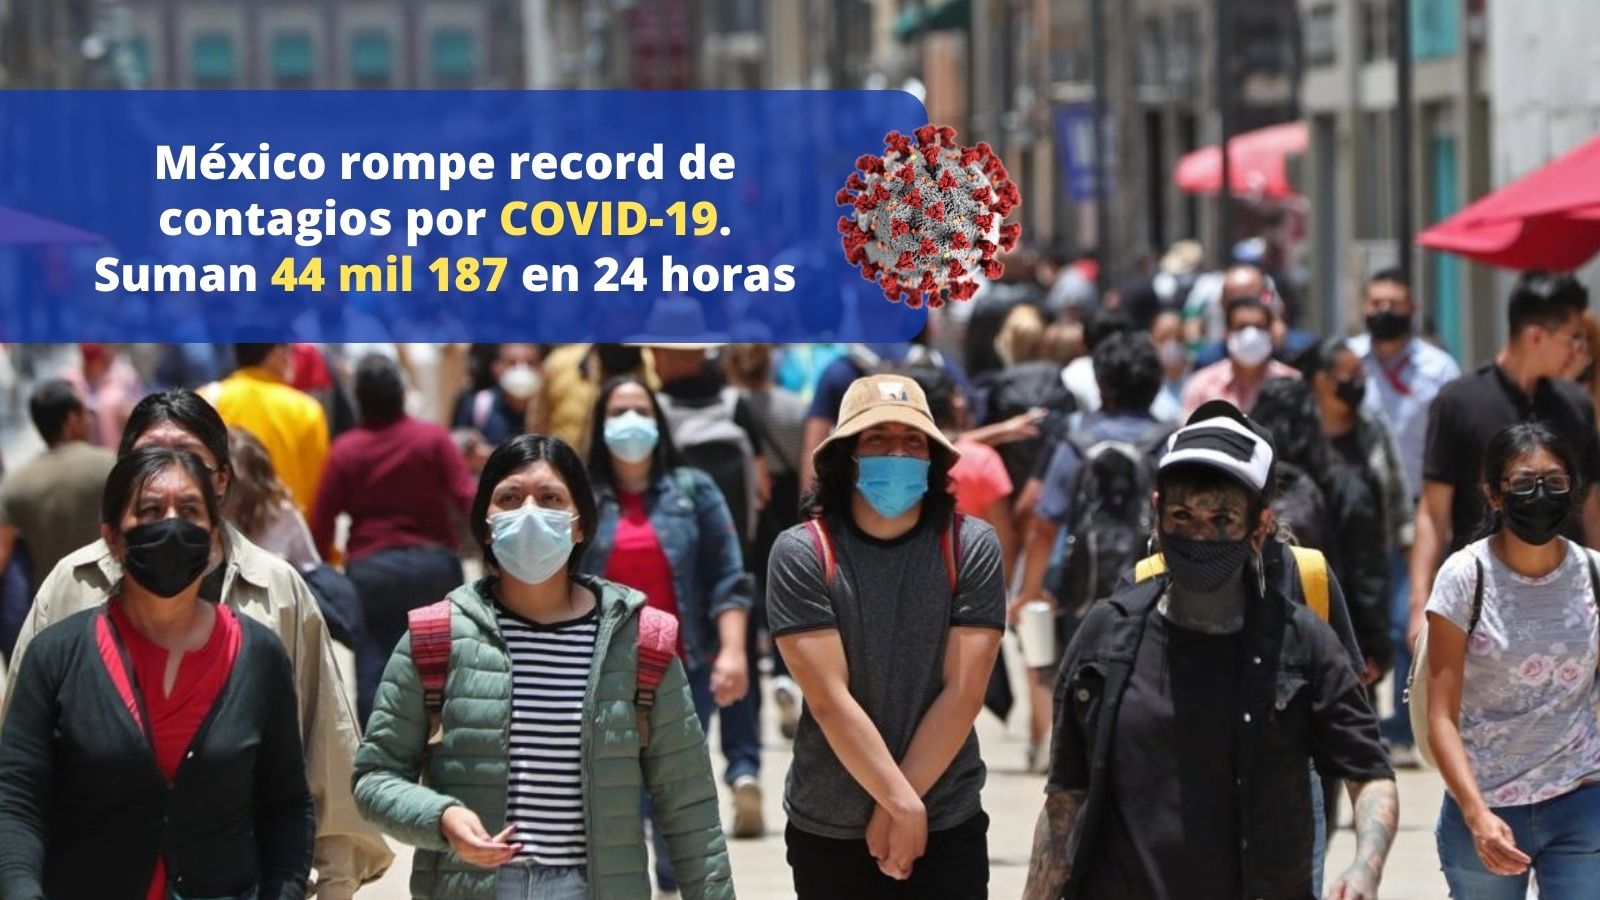 México record contagios COVID-19 en 24 horas